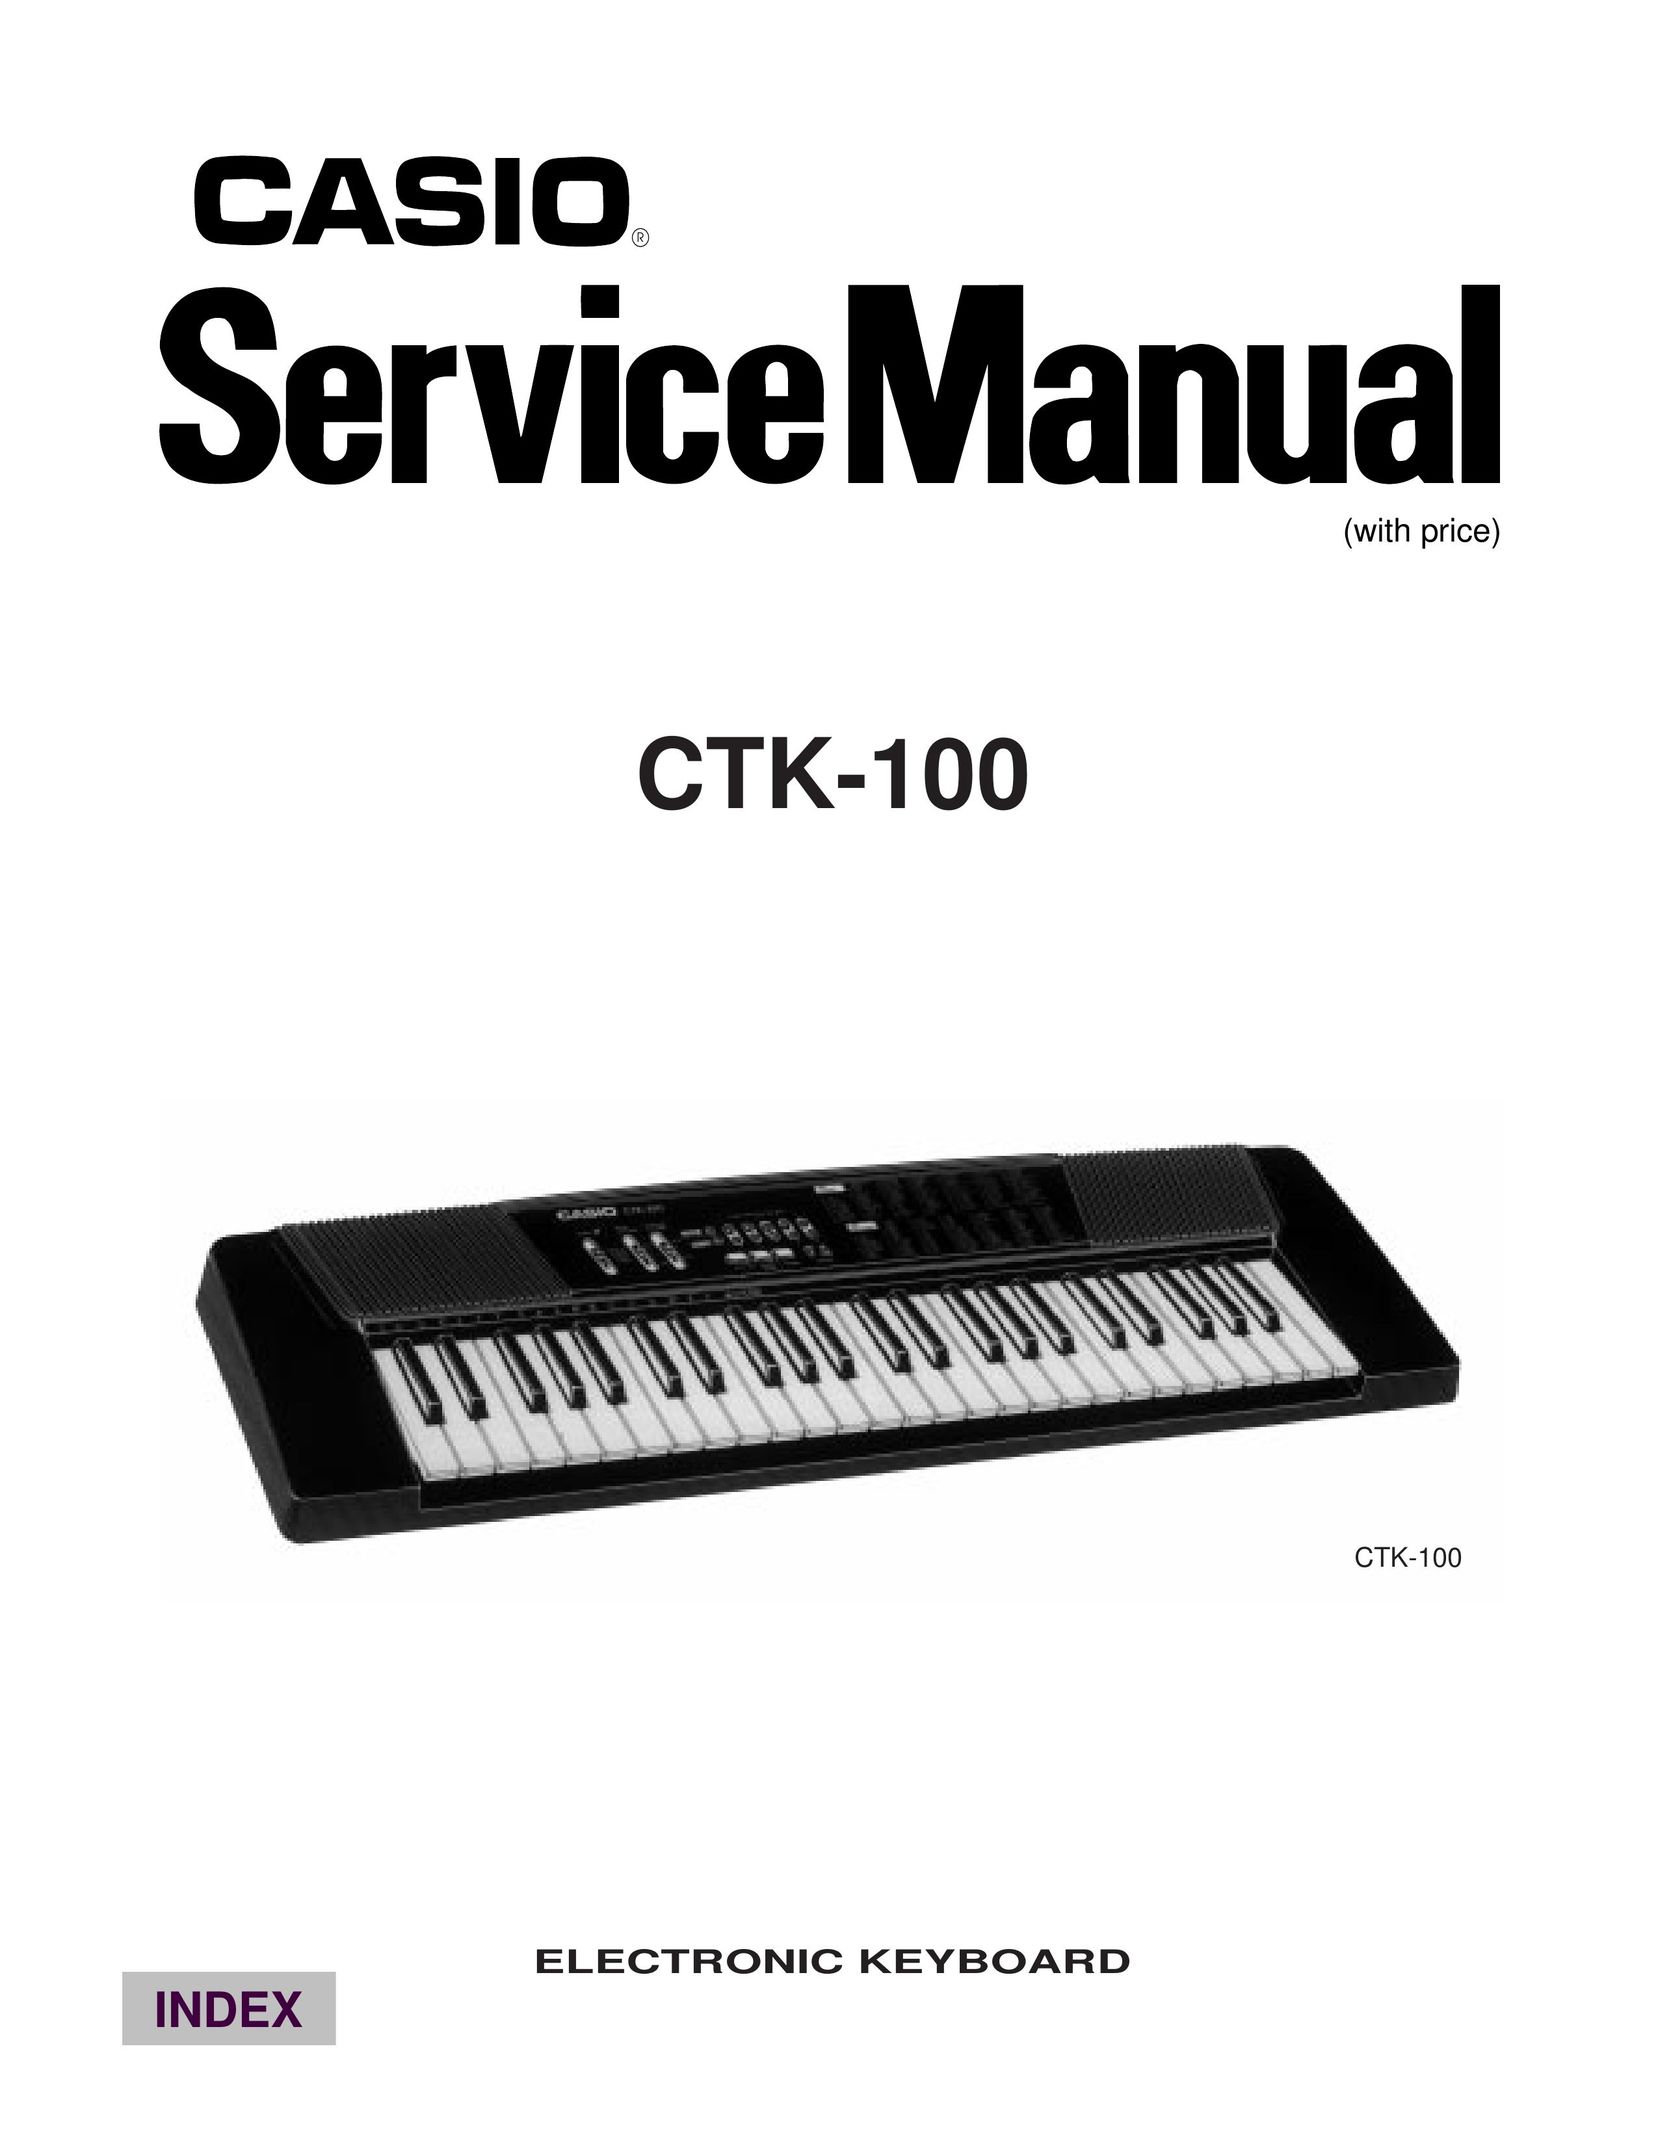 Casio CTK-100 Video Game Keyboard User Manual